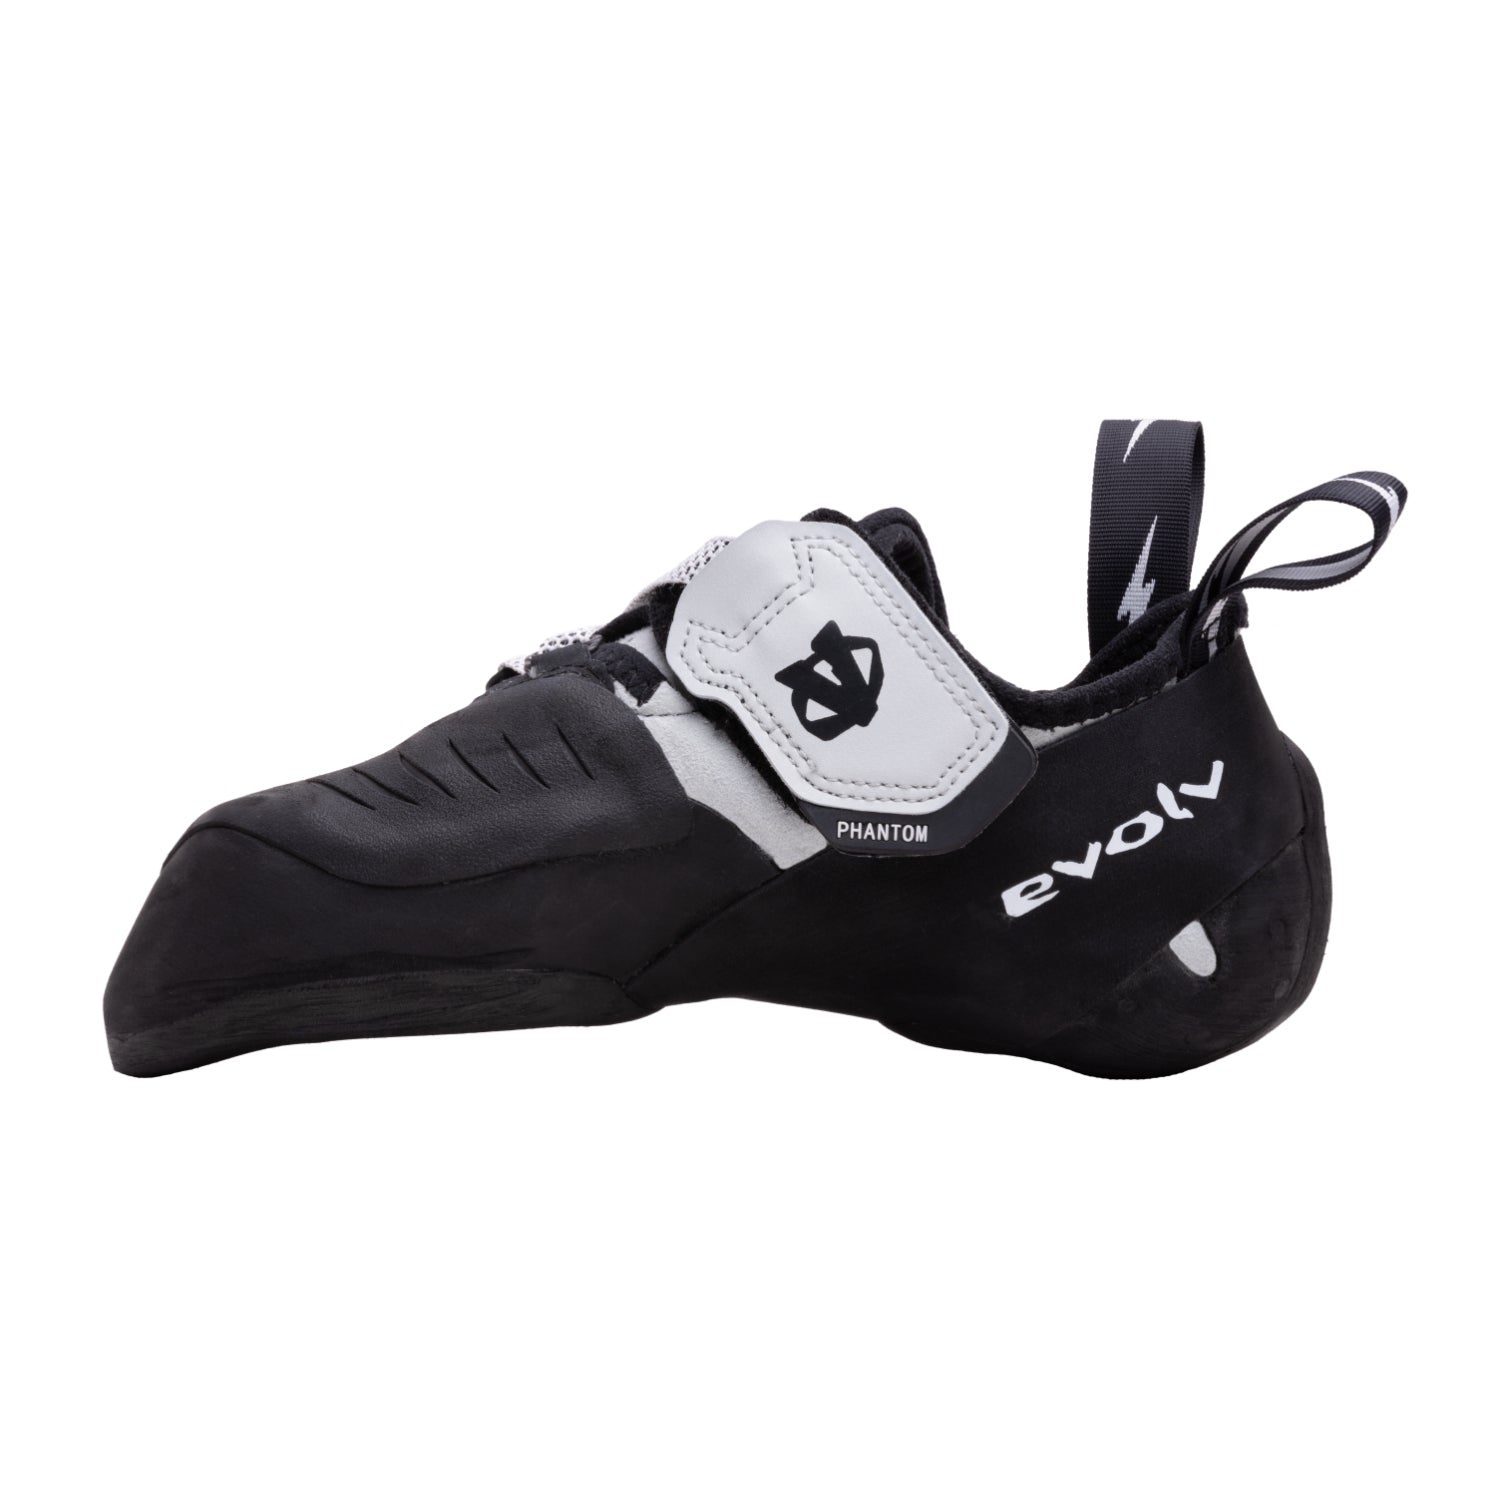 Evolv Phantom LV Climbing Shoe | Buy now at Rock+Run